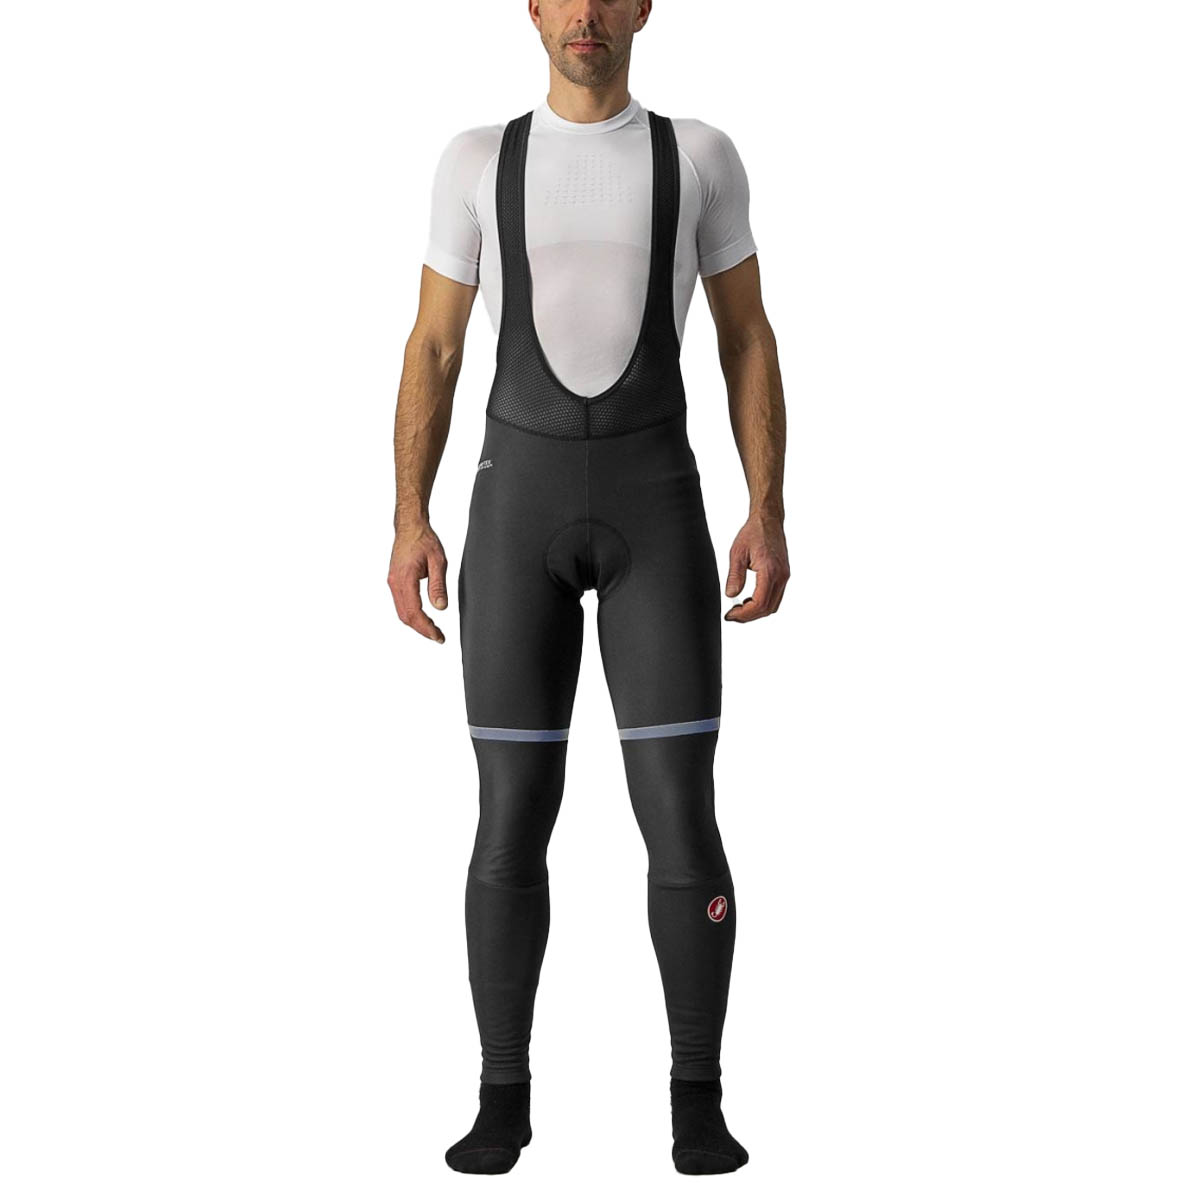 FiTX Men’s Cycling Bib Shorts 3D Coolmax Gel Padded Compression Bicycle Bibs Breathable MTB Bike Pants 